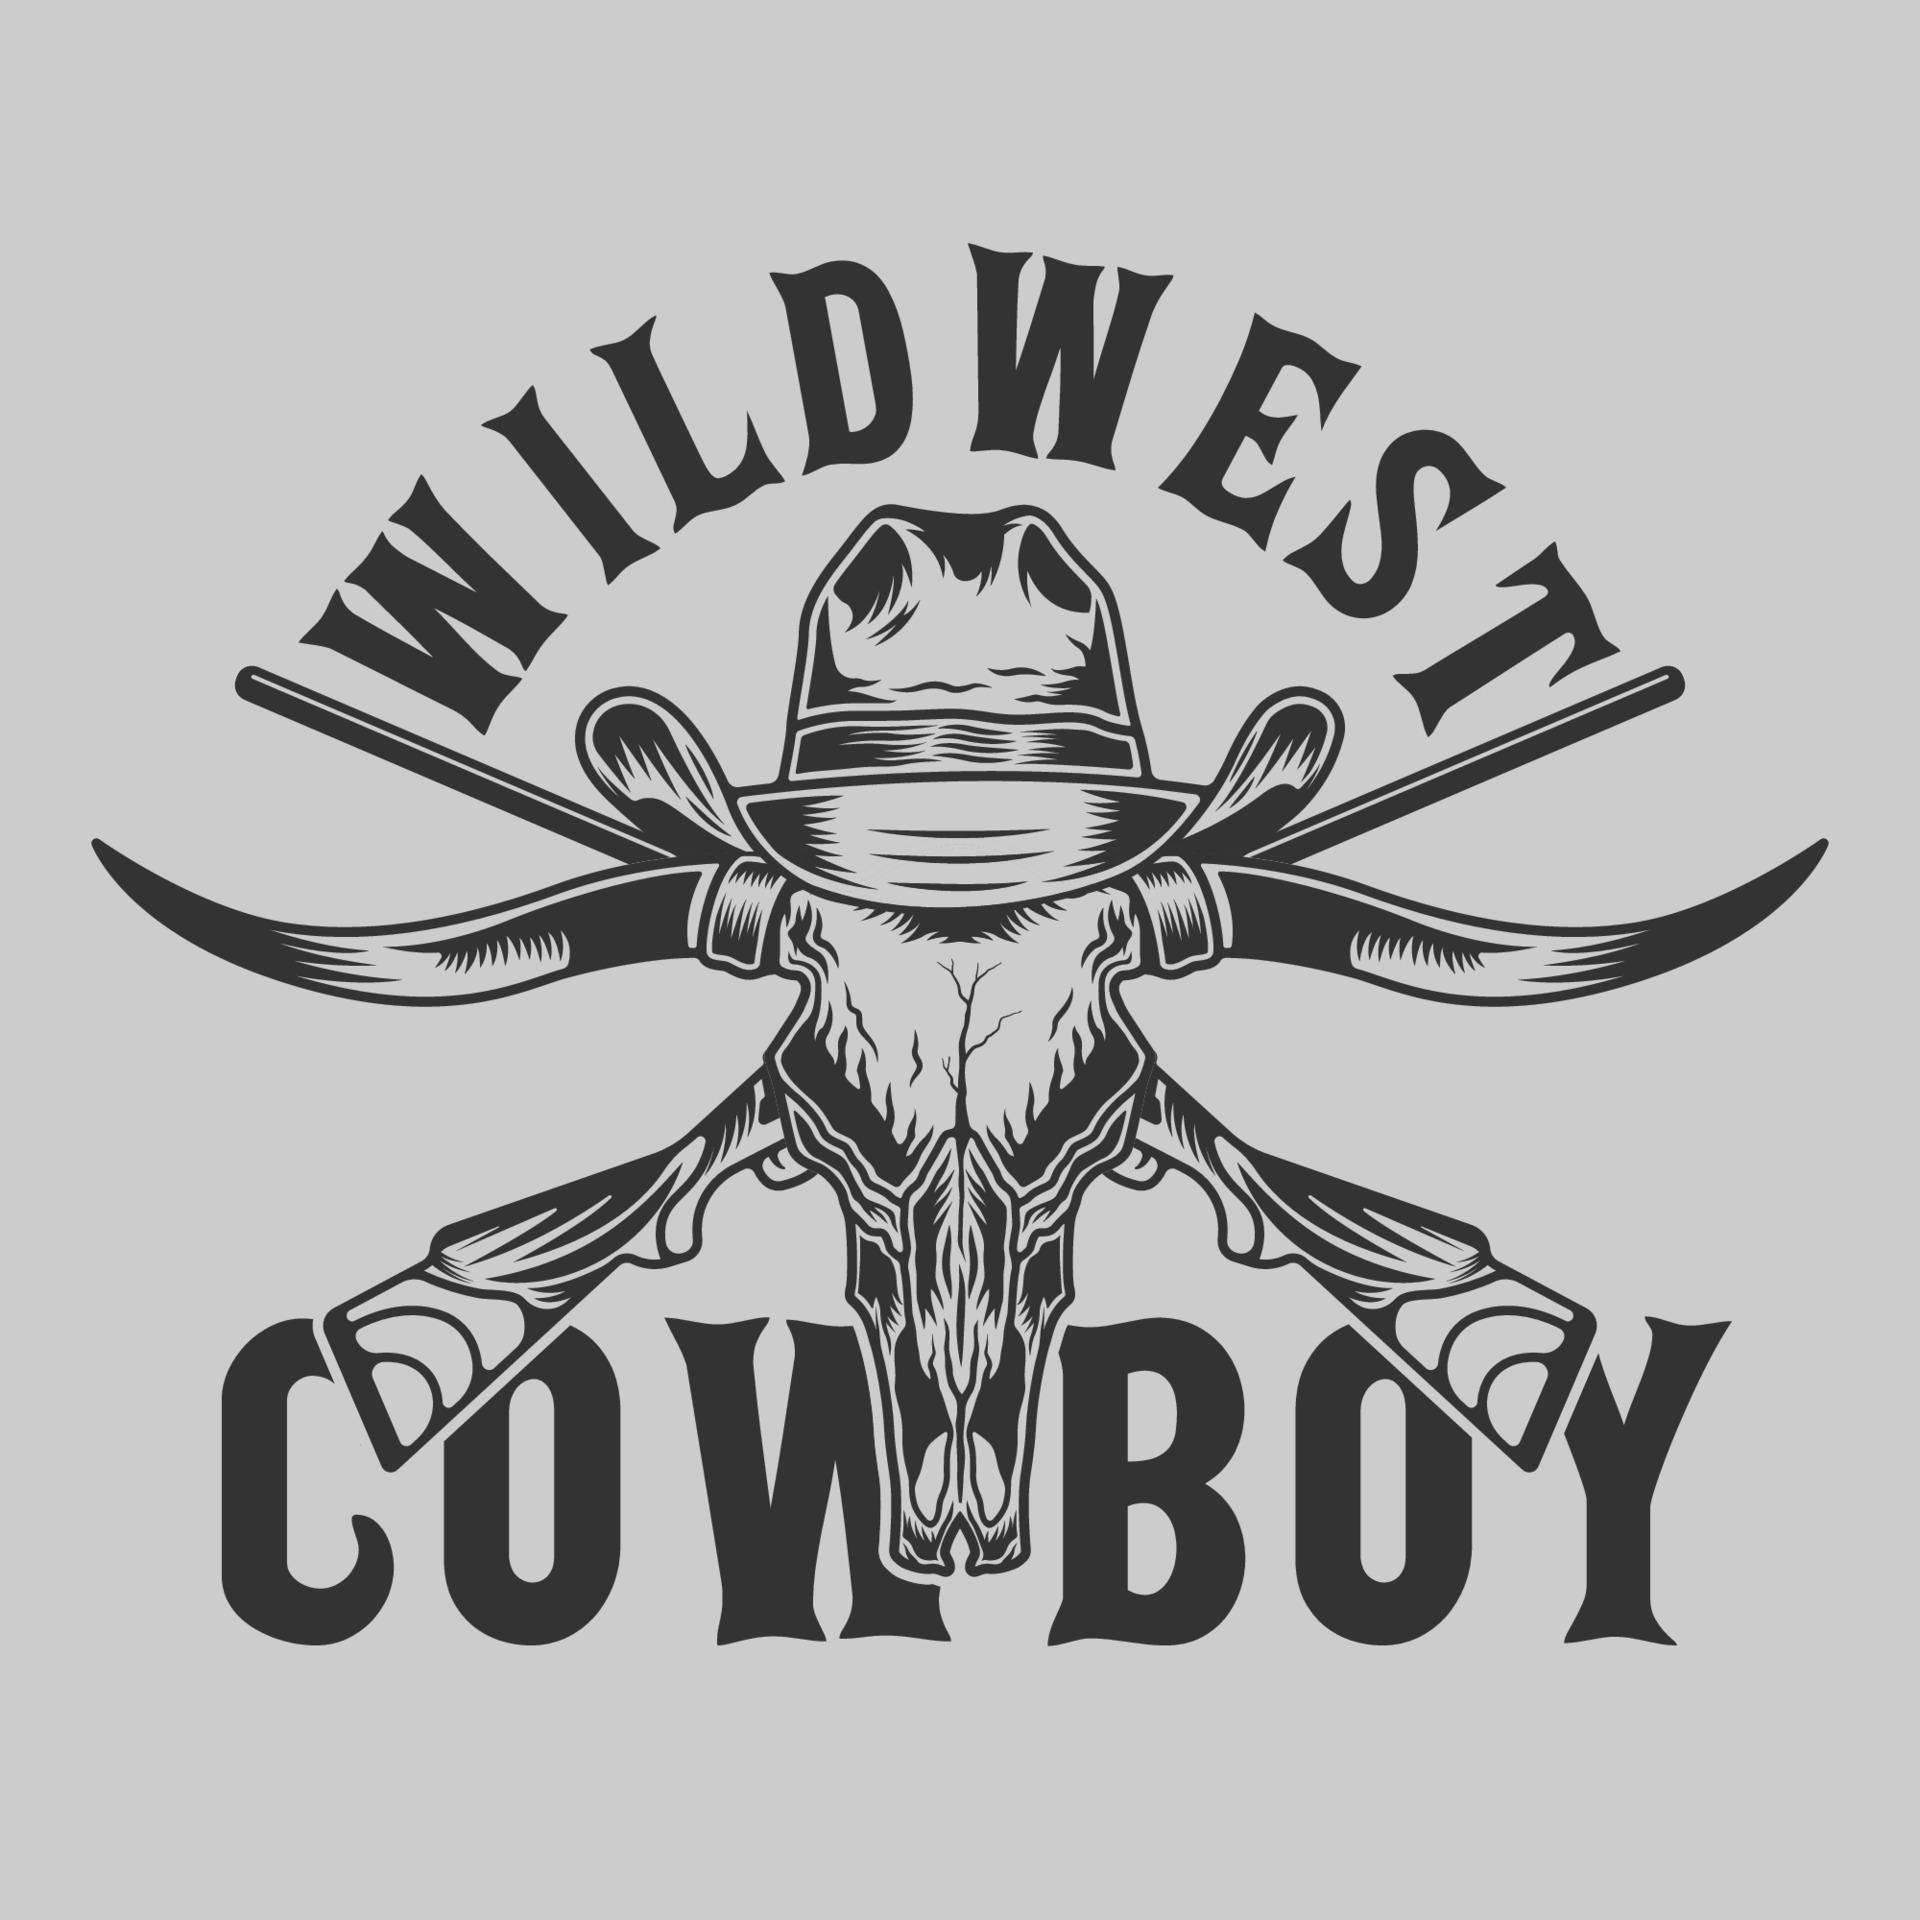 wild west cowboys vintage badge 7067866 Vector Art at Vecteezy